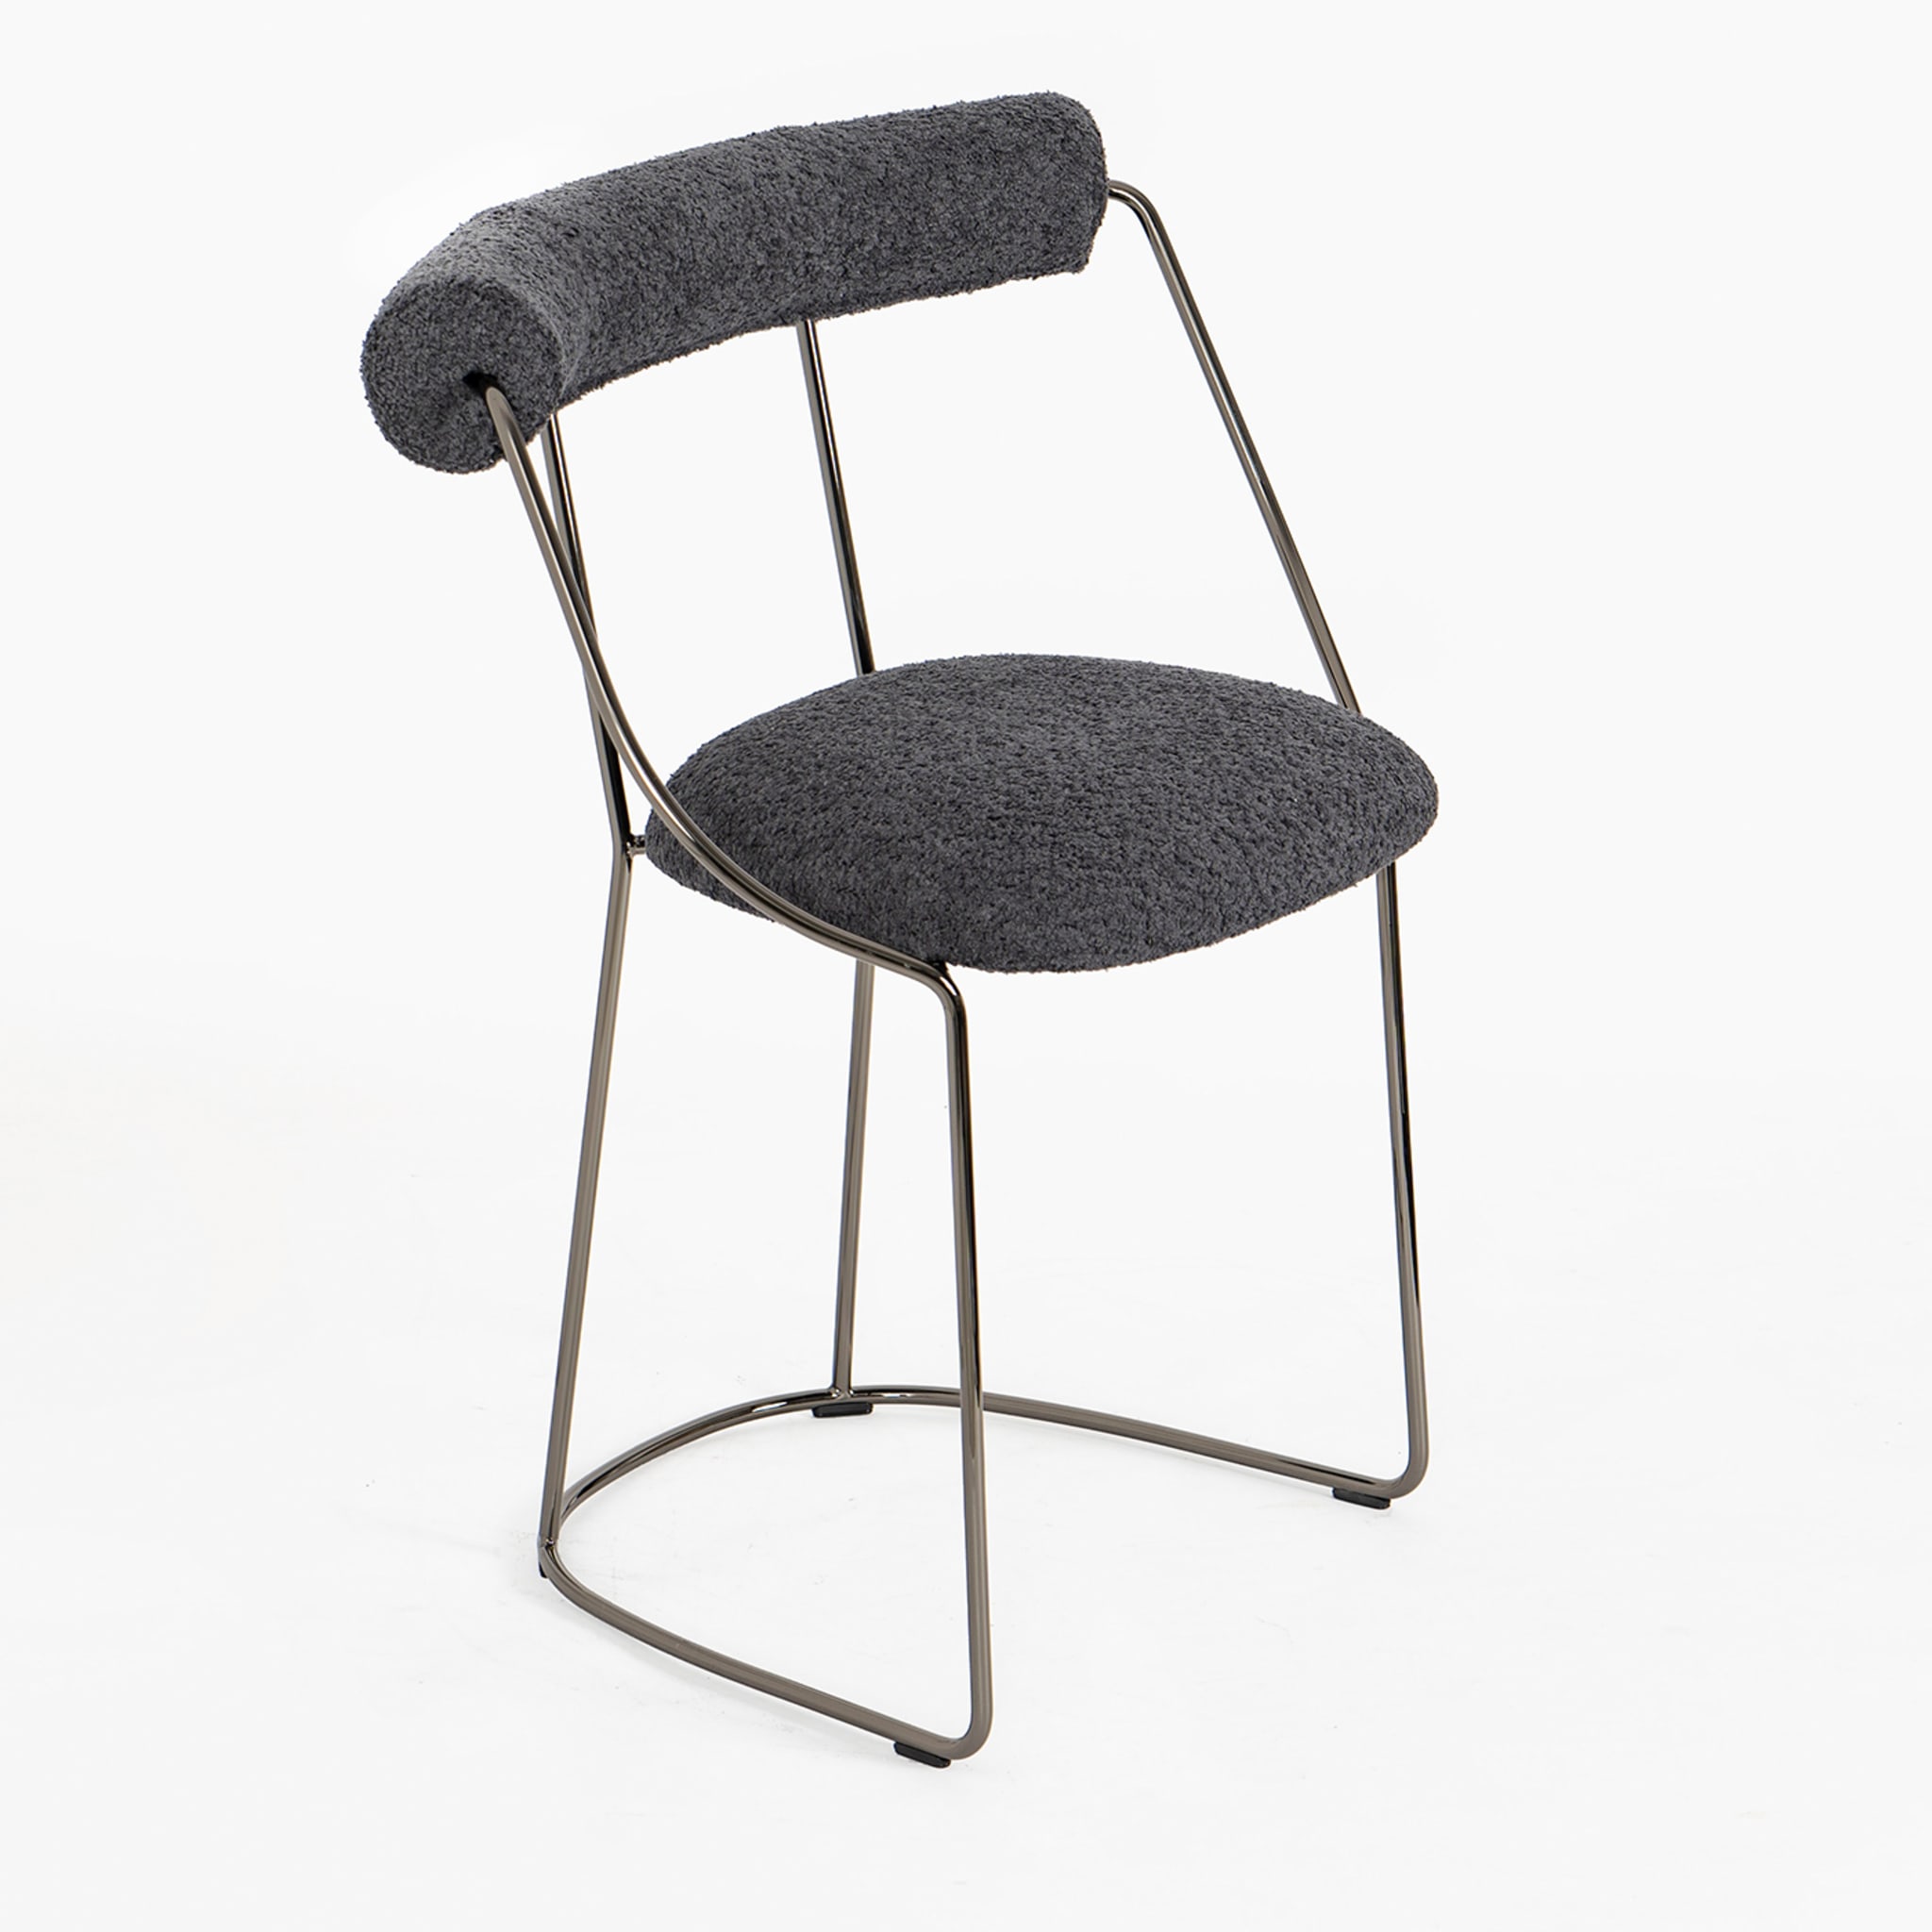 Fran Ultrablack Chair - Alternative view 3